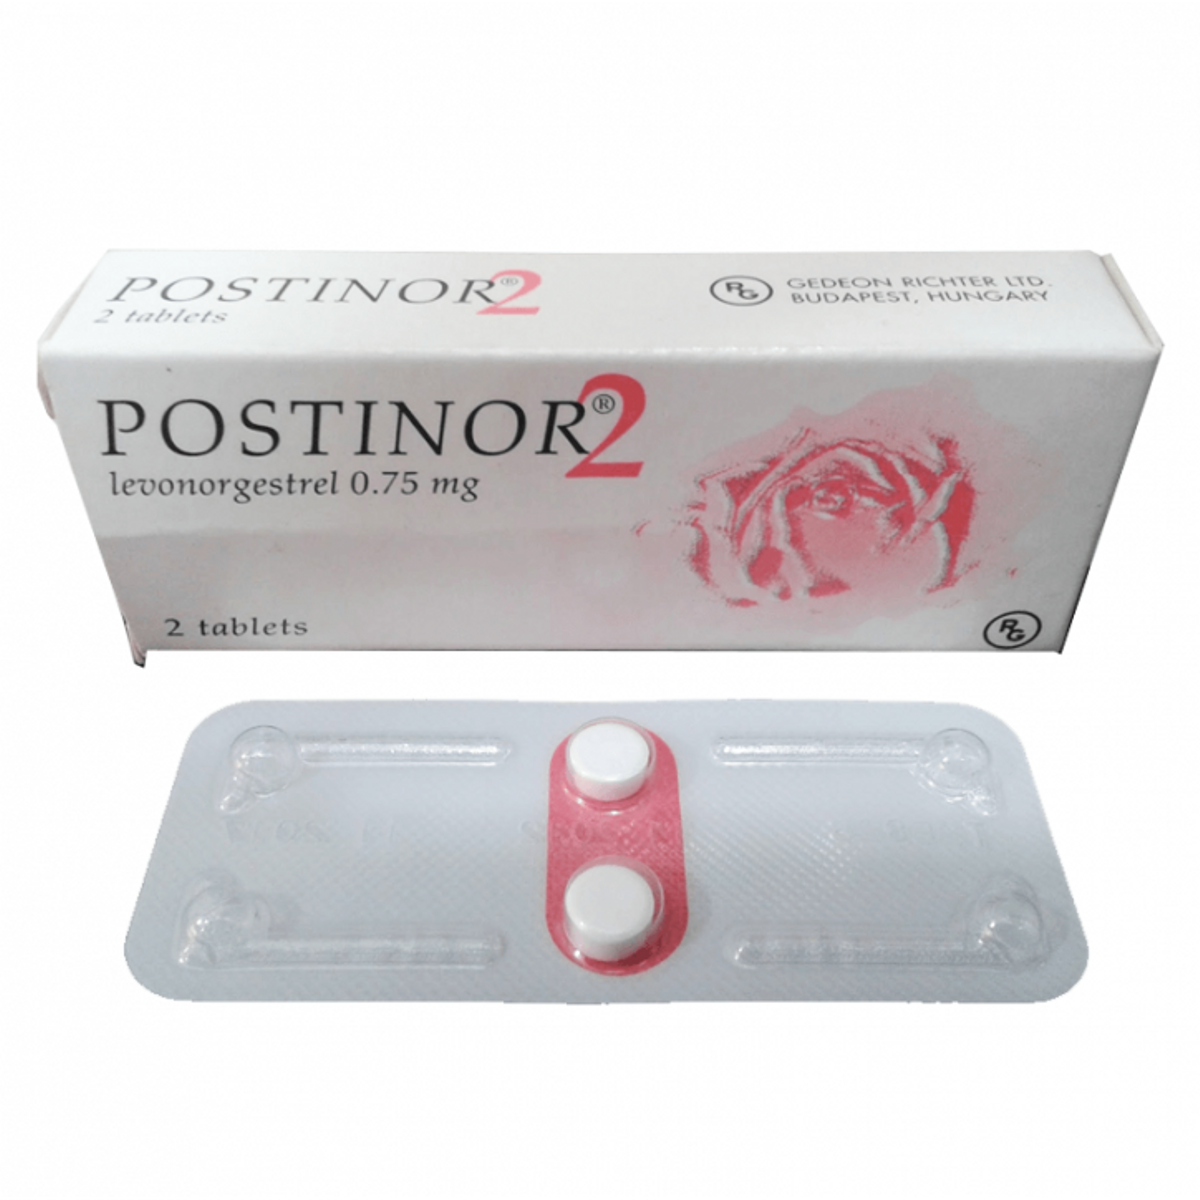 Buy Postinor 2 24Hr Service Online PillDoctor GH